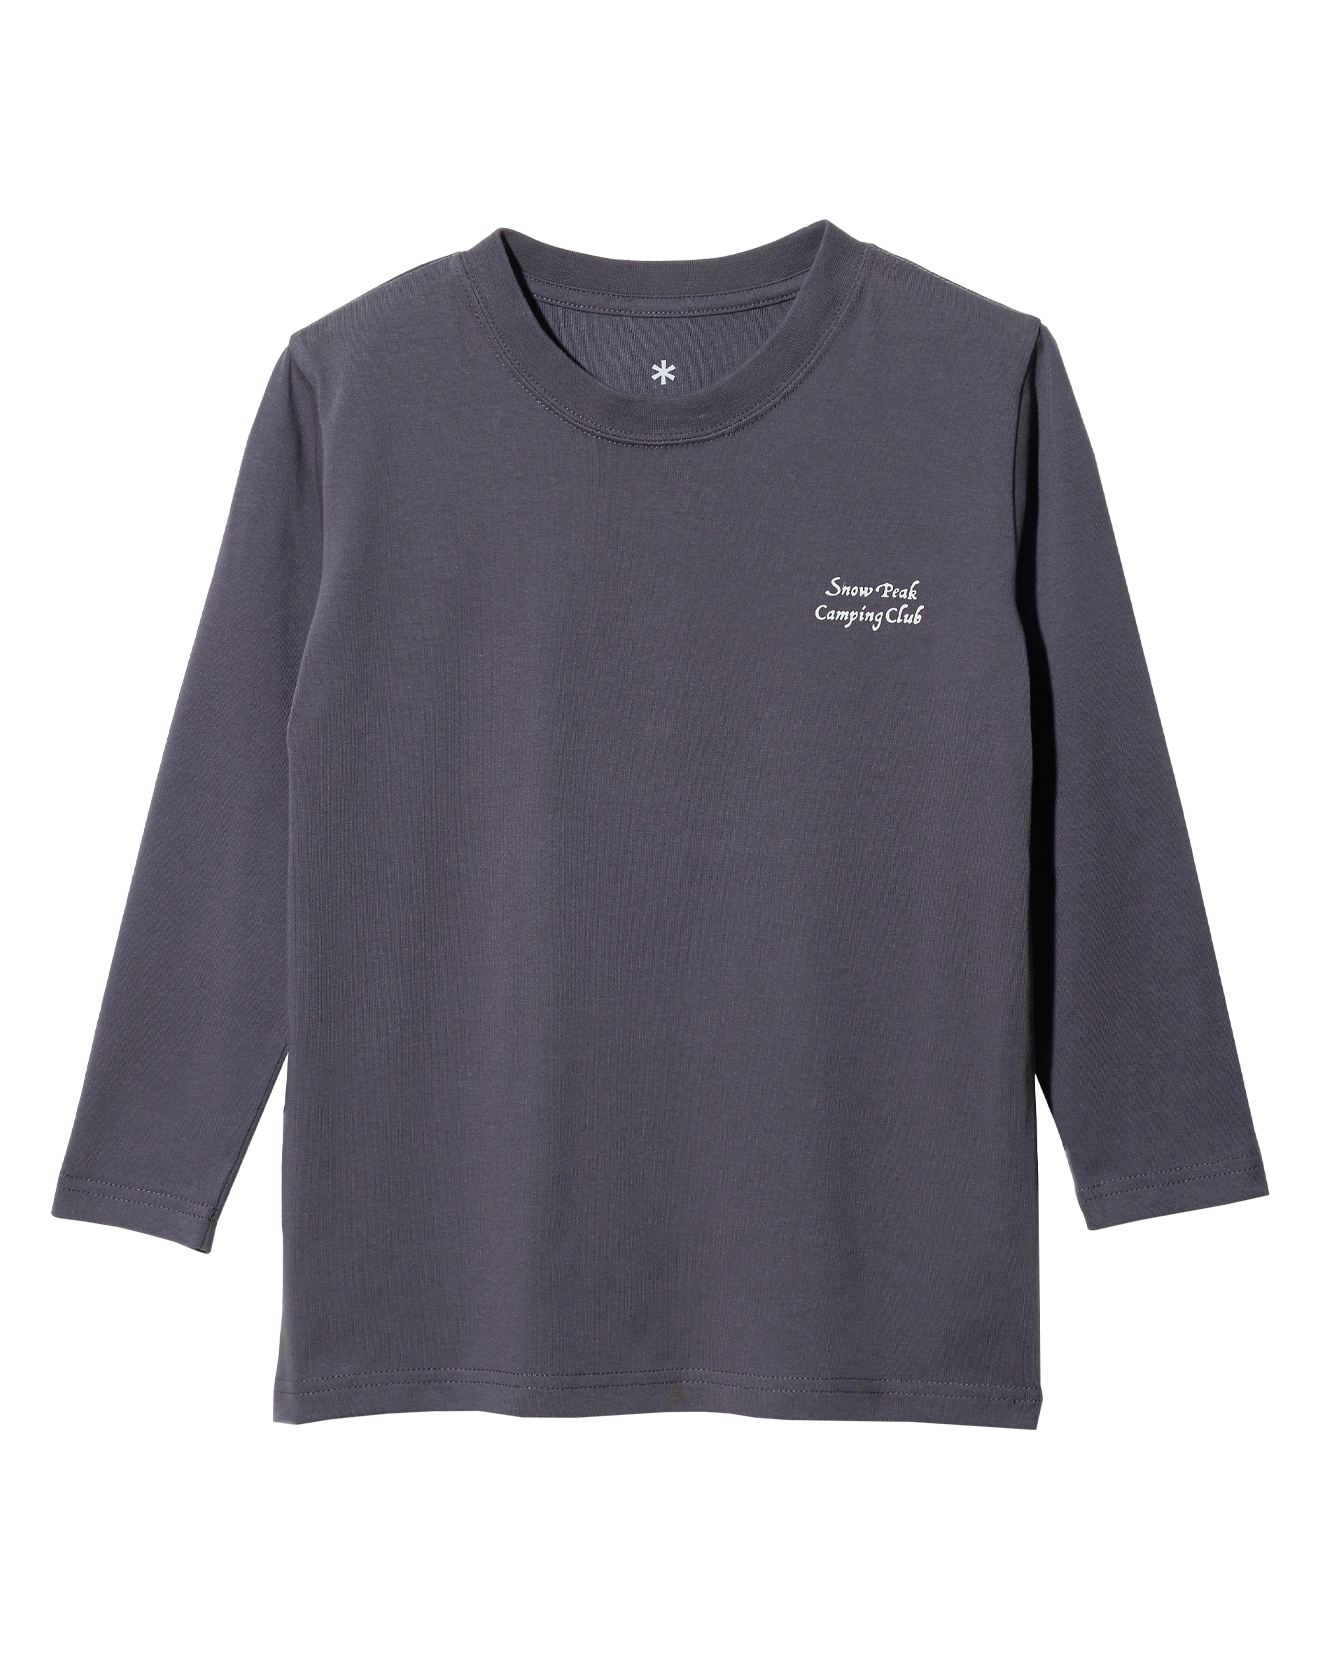 Kids Camping Club Long Peak – Snow Sleeve T-Shirt